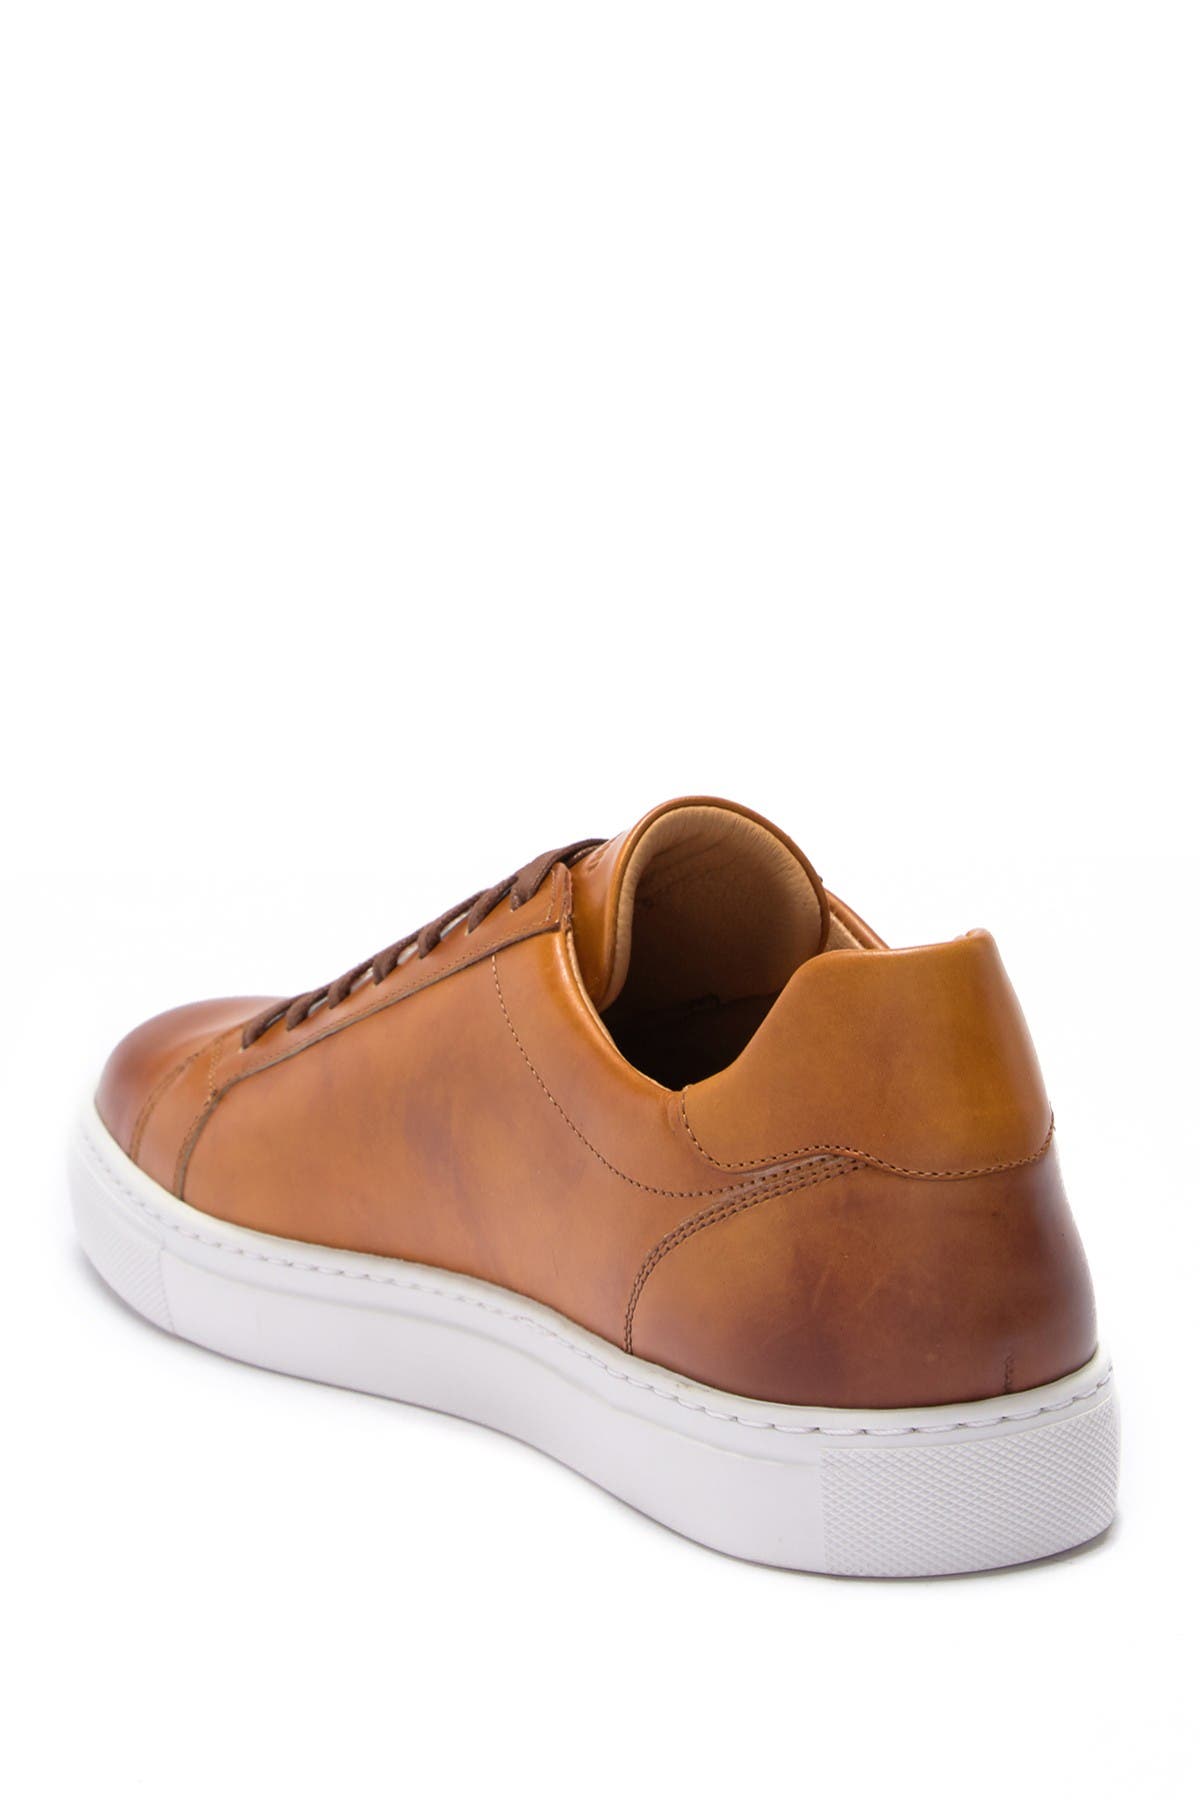 Magnanni | Cuervo Leather Sneaker 